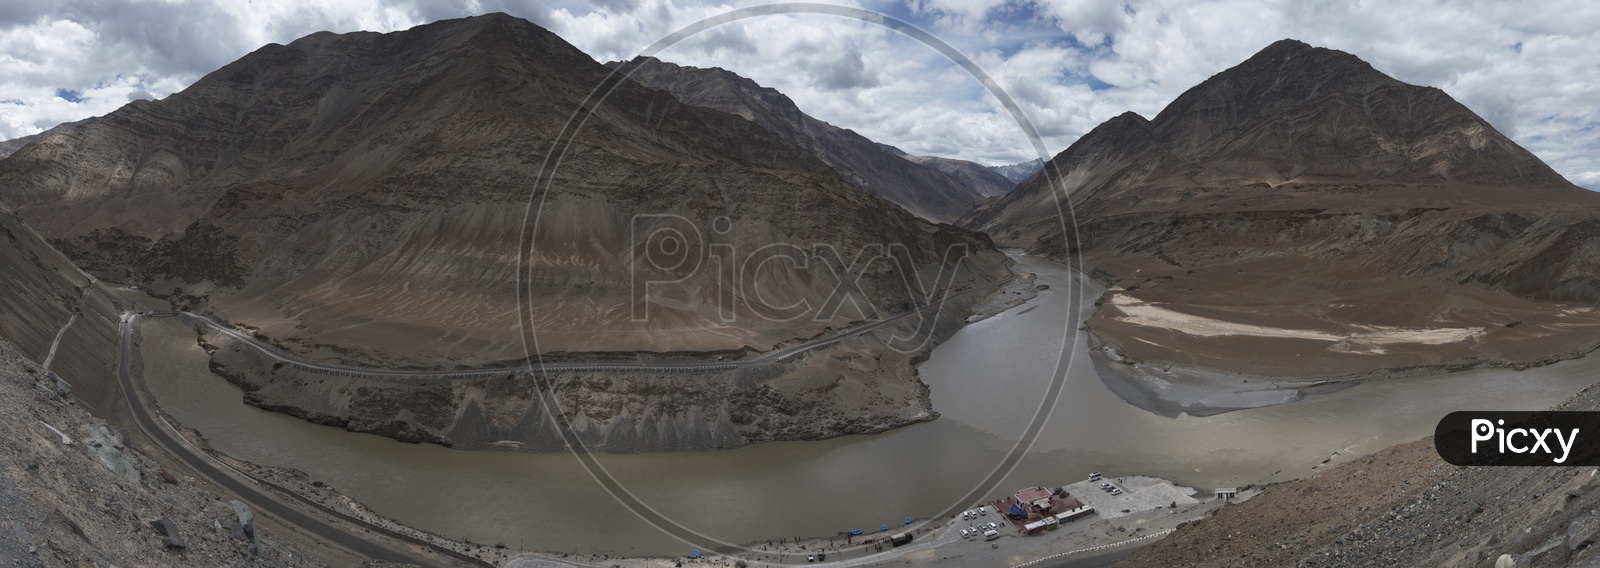 Indus Zanskar Panorama